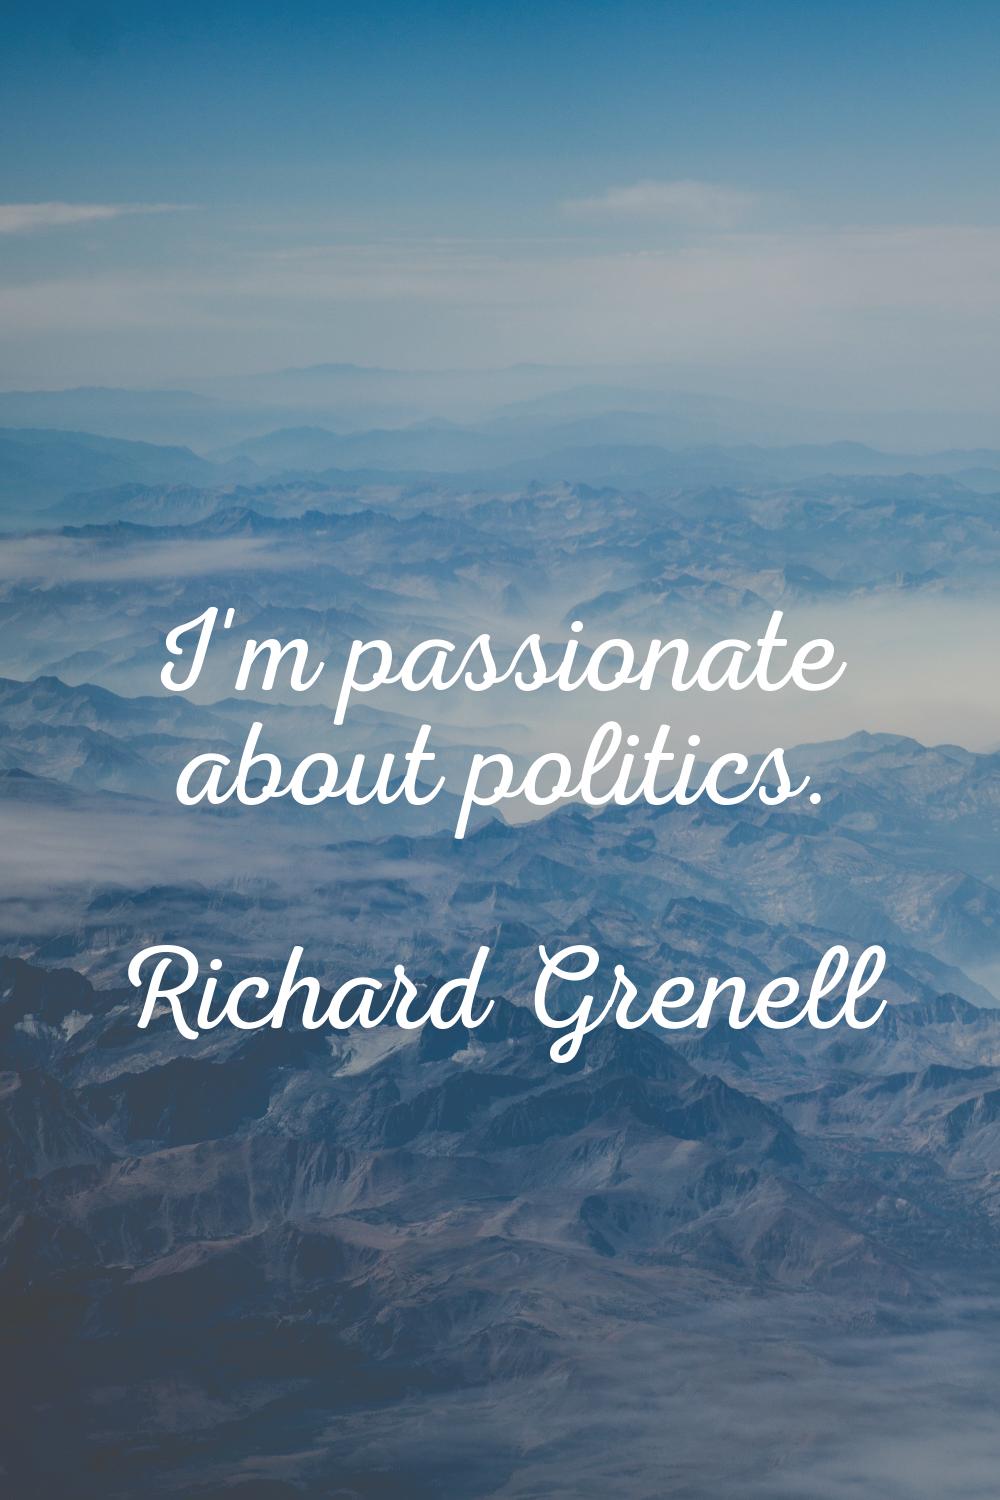 I'm passionate about politics.